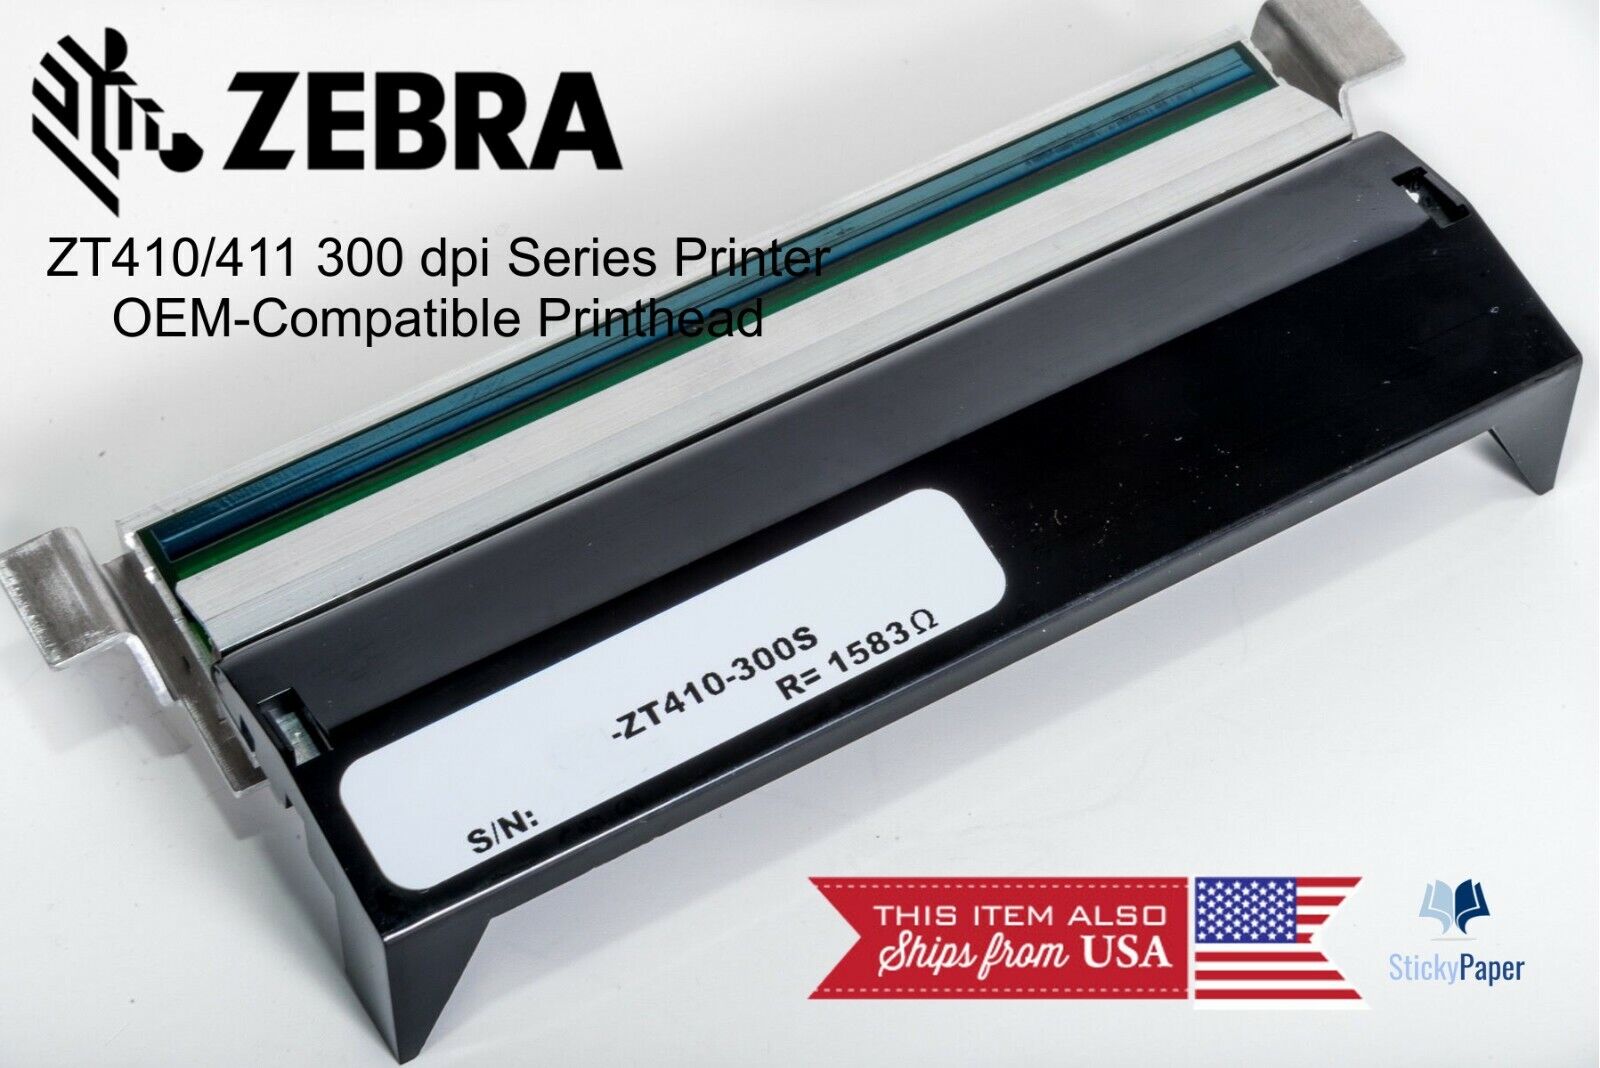 Zebra ZT410/ZT411 300 dpi Printhead (P1058930-010) USA Stocked & Shipped